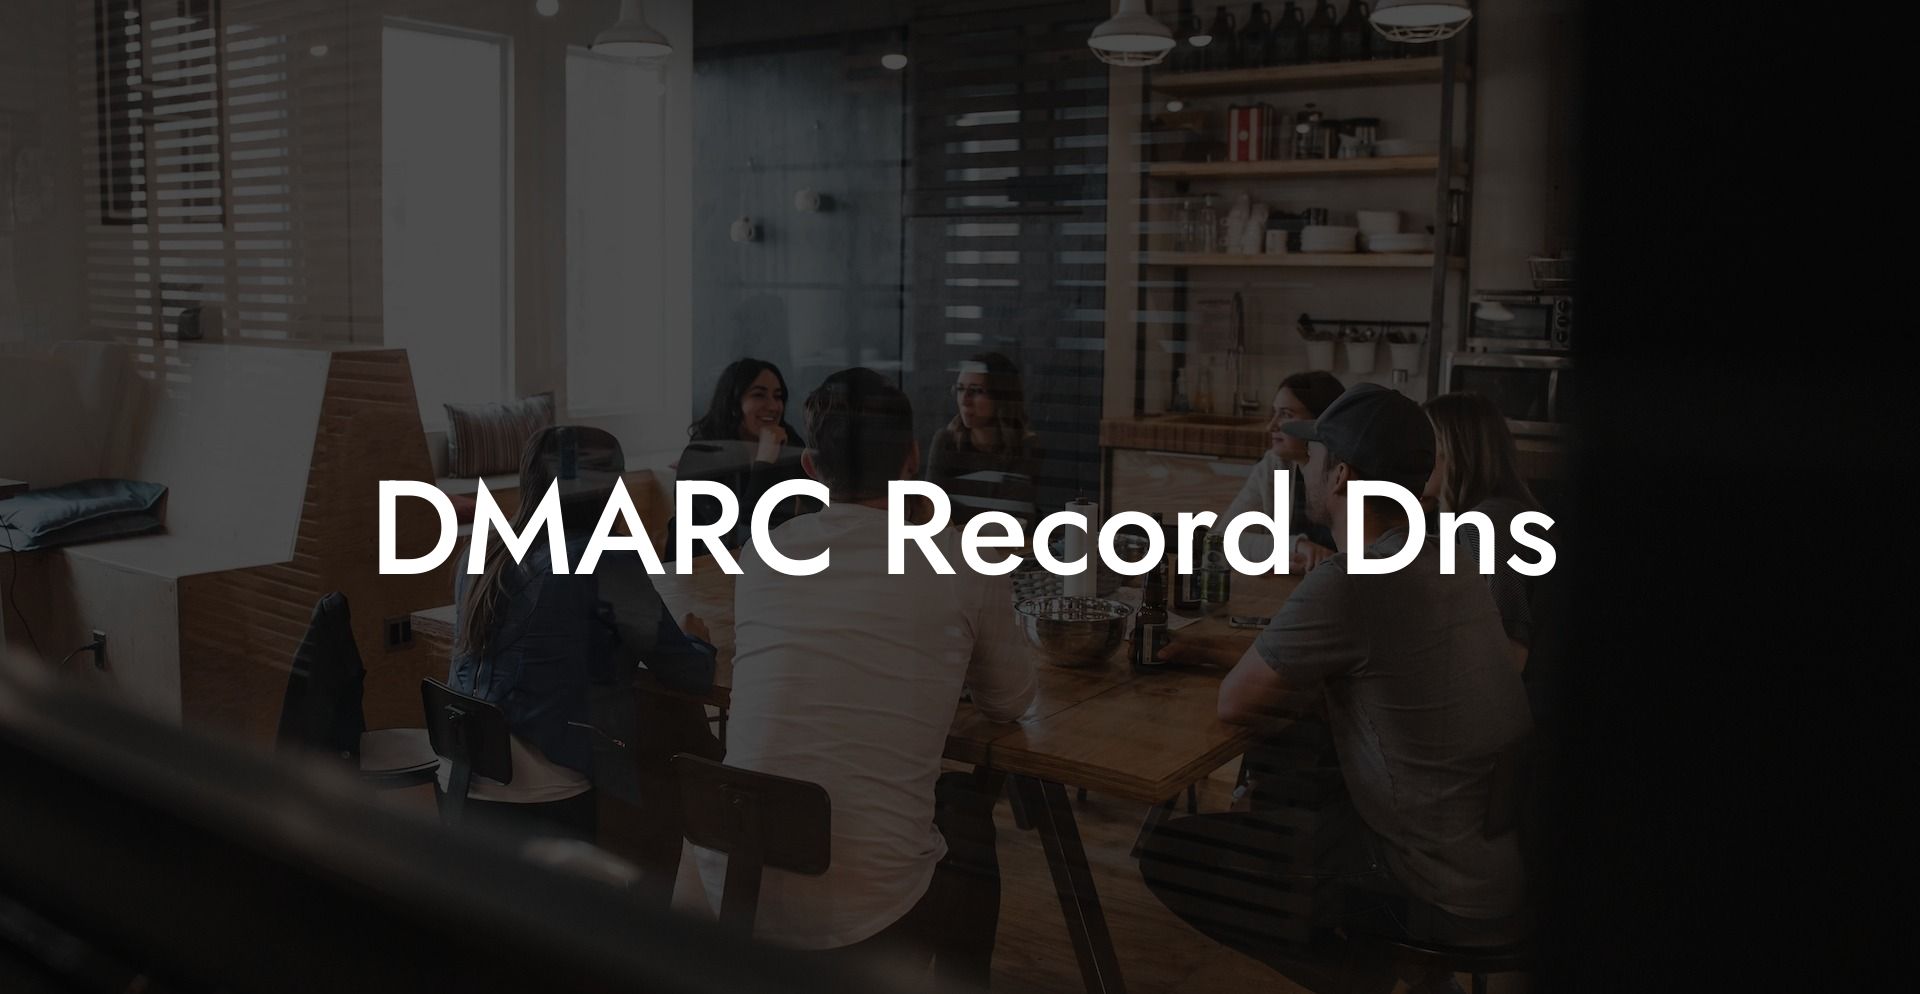 DMARC Record Dns